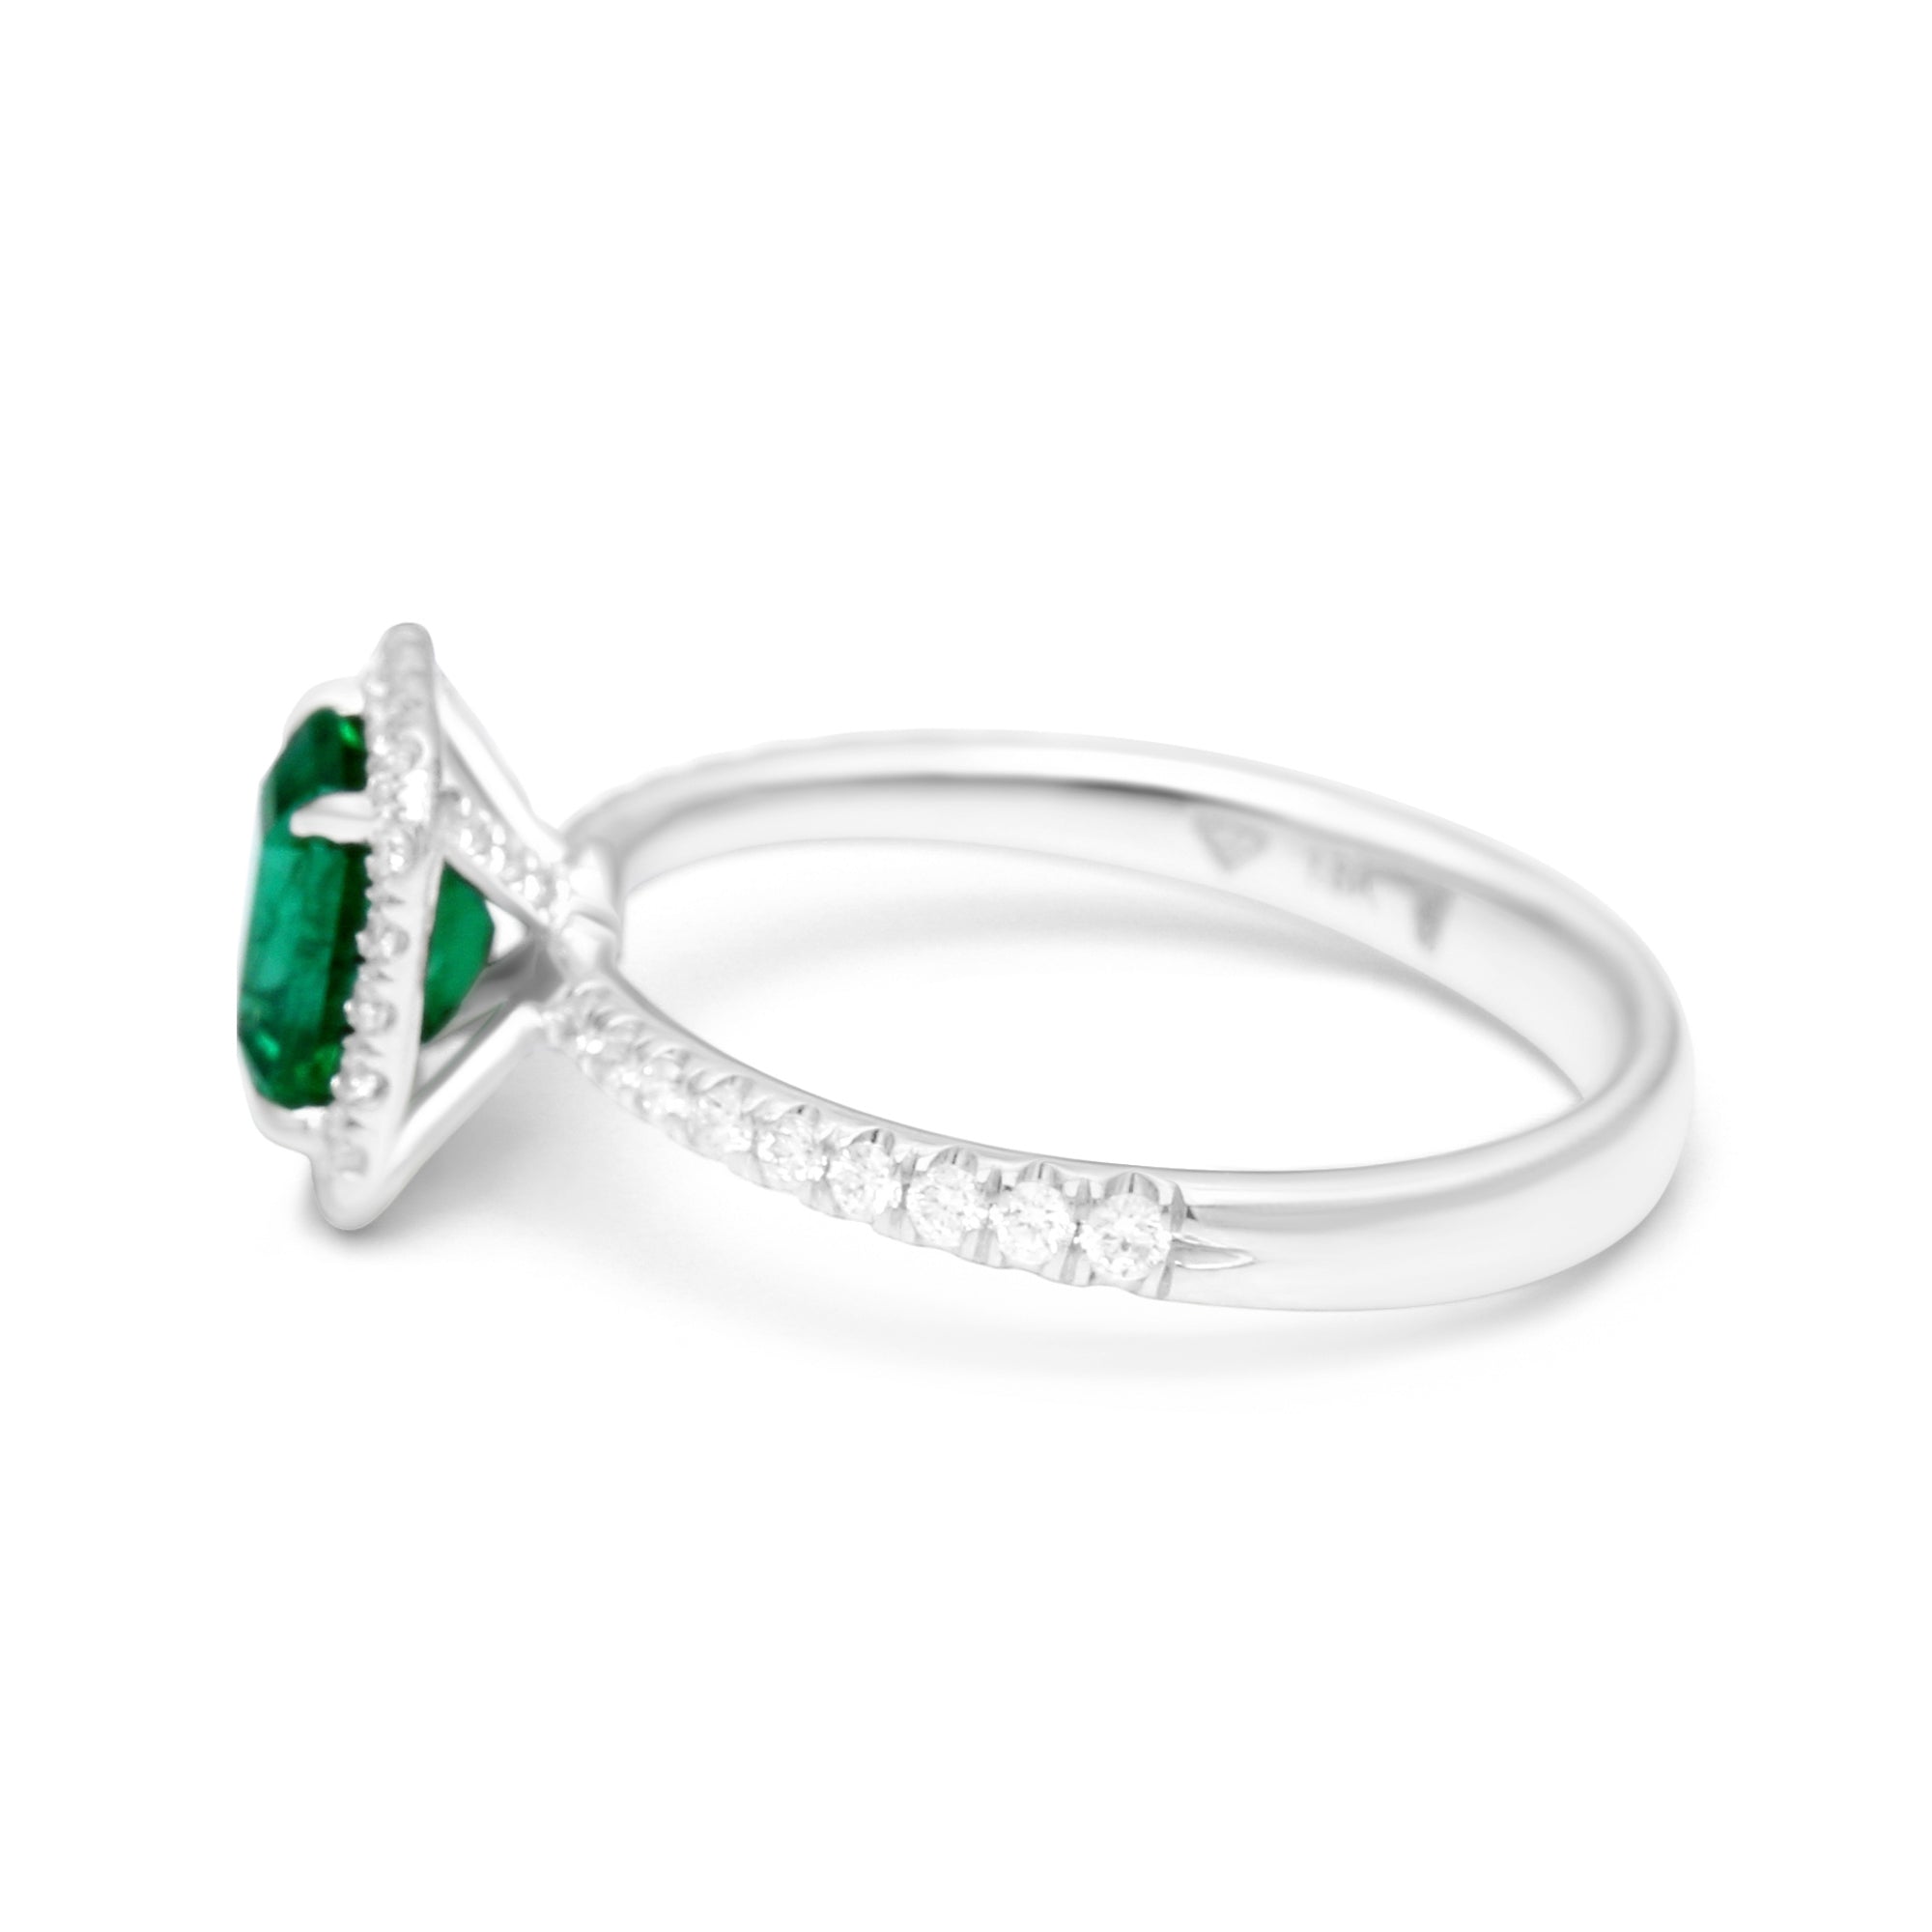 Emerald with Diamonds Halo Ring - 1.19ct TW